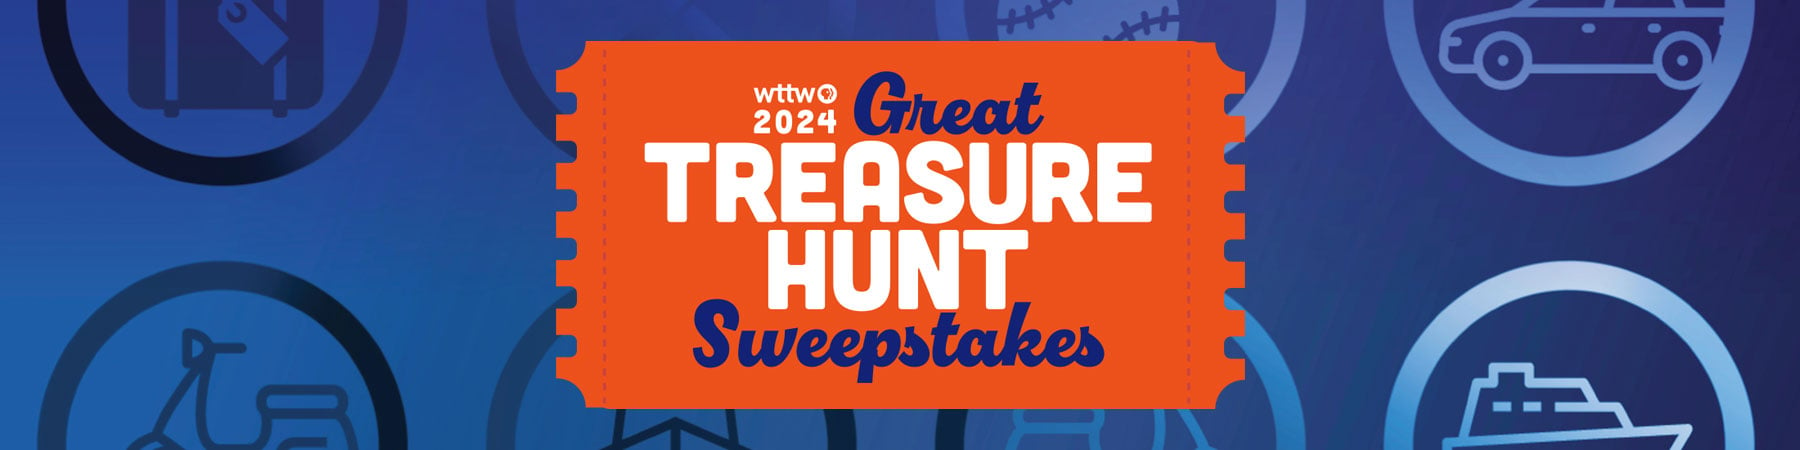 WTTW 2024 Great Treasure Hunt Sweepstakes